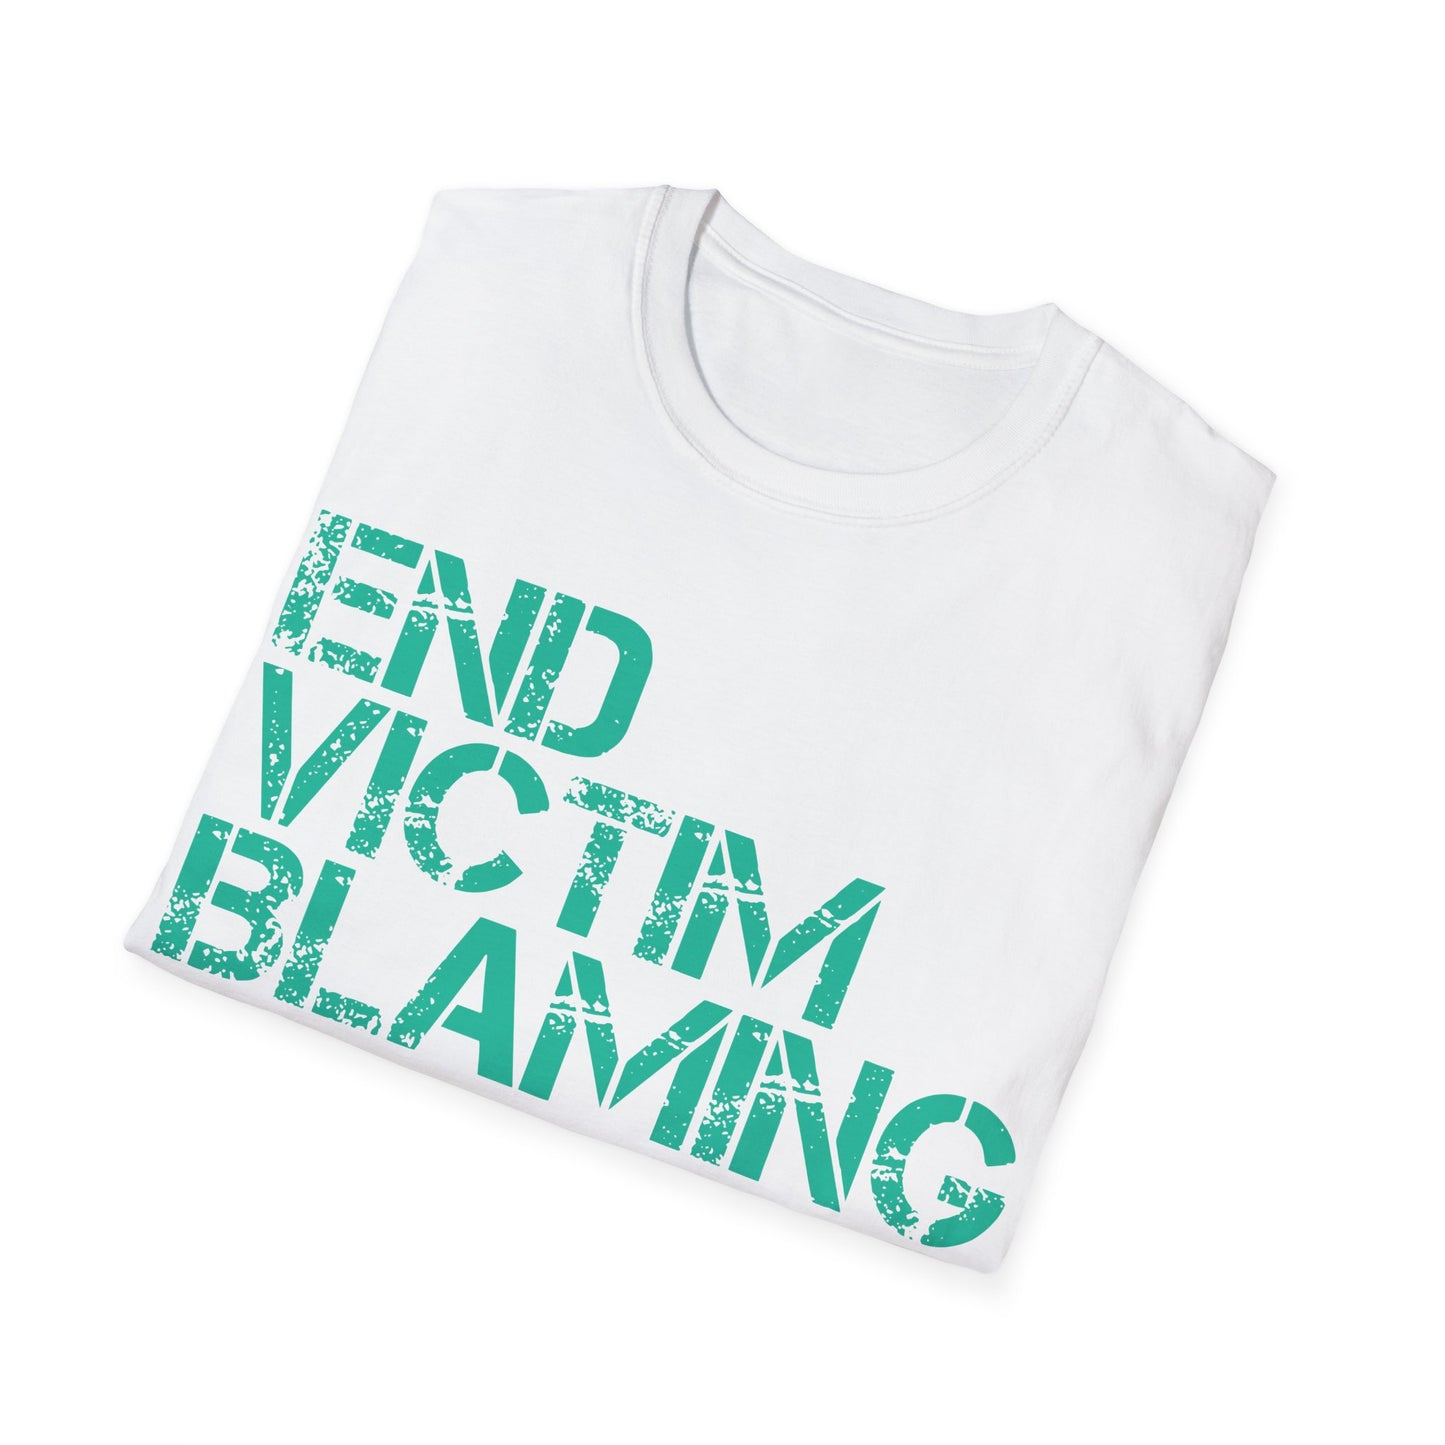 End Victim Blaming